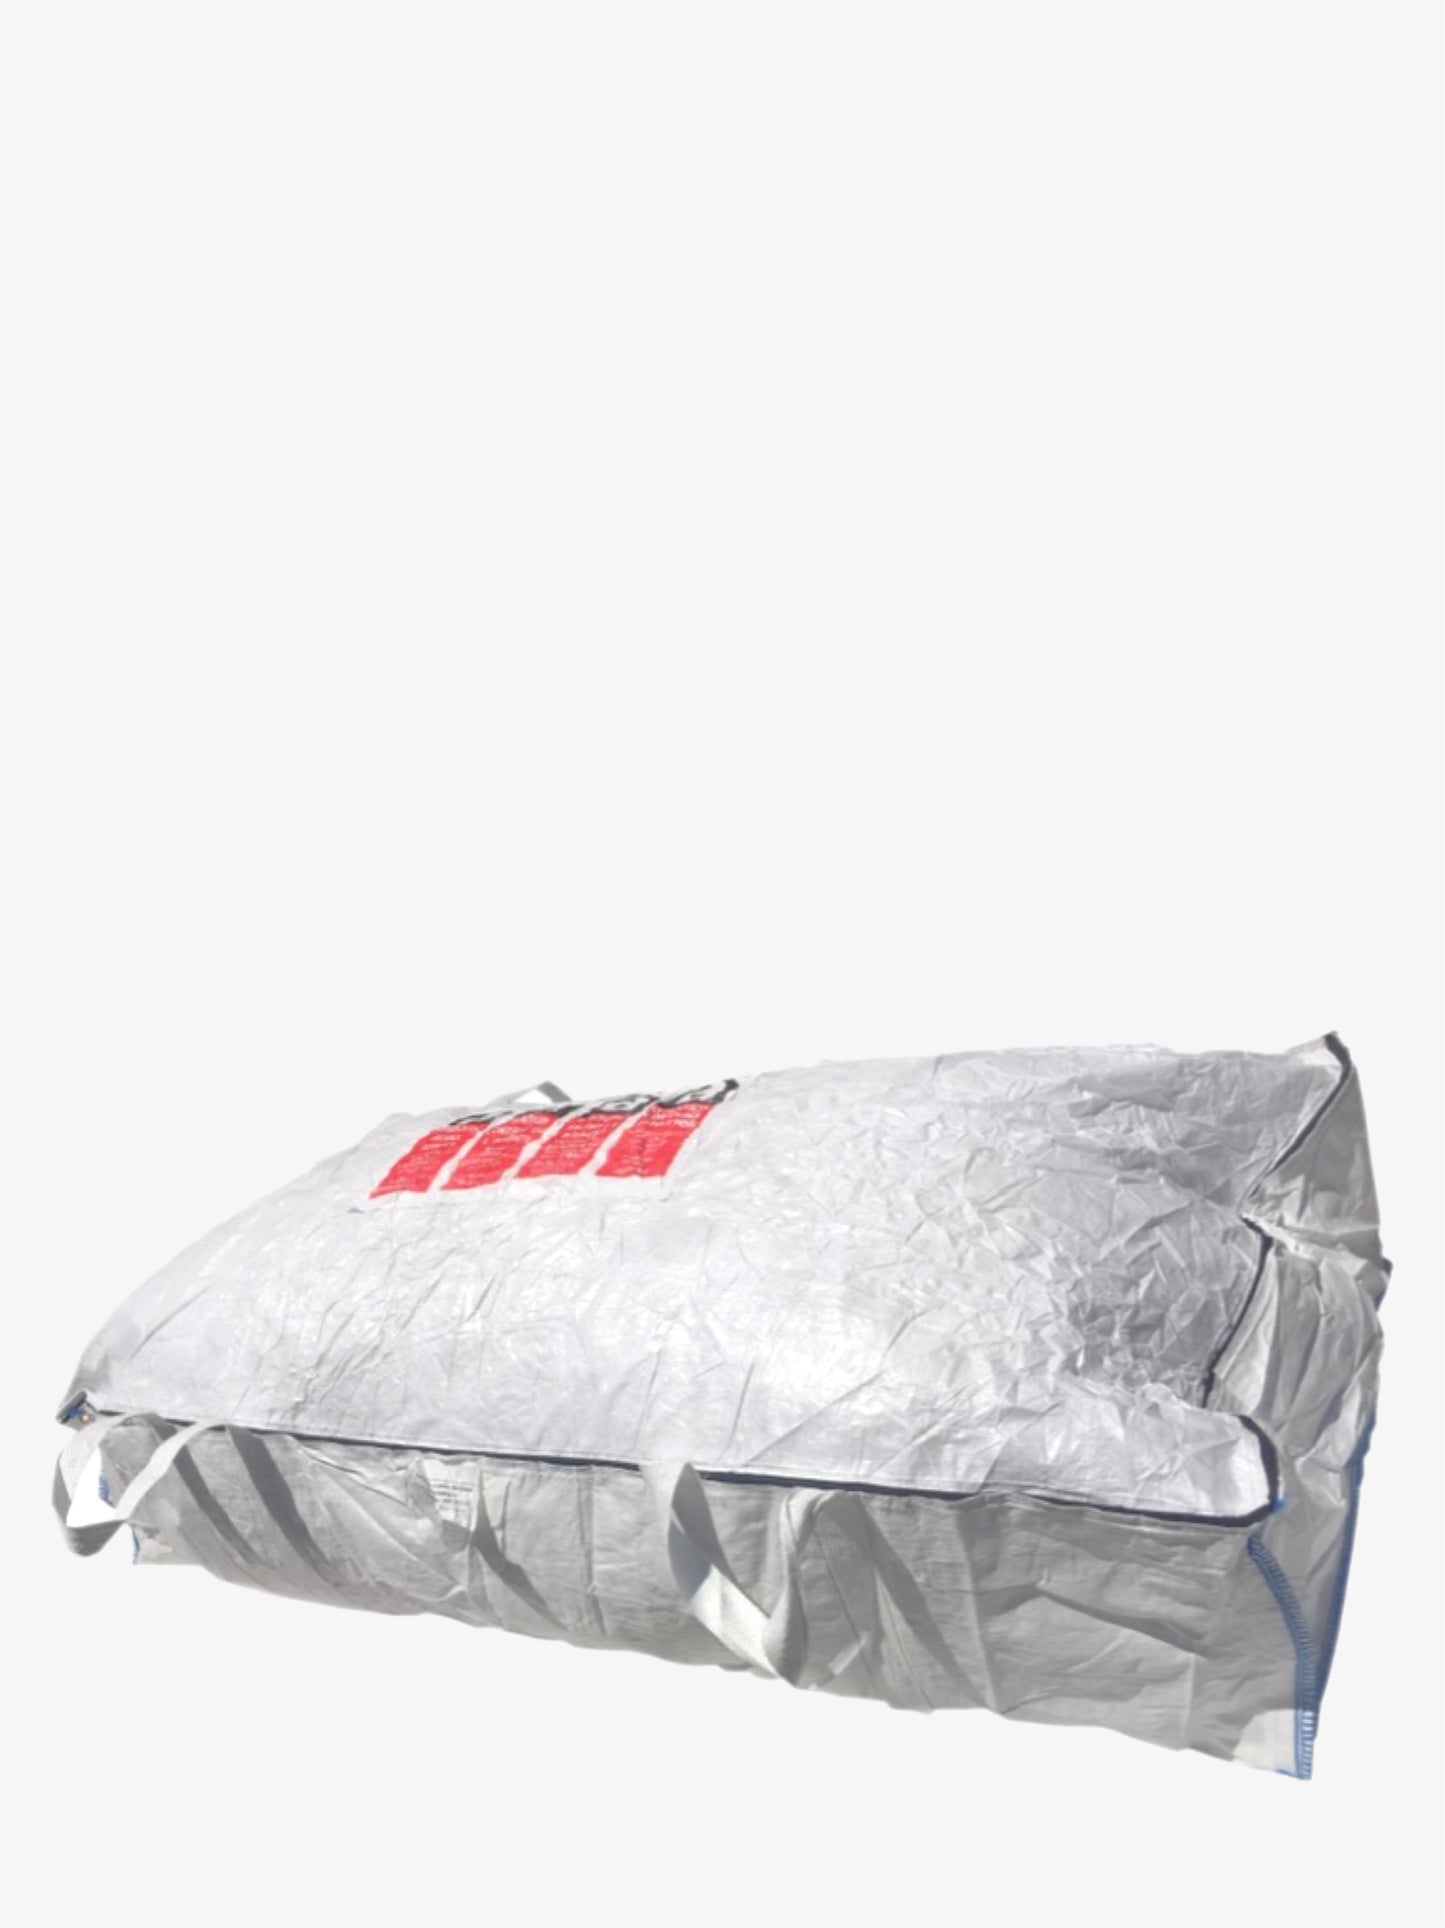 TYPE G | 1500kg | Asbestos Sheeting Bag | Zip Top | 200 micron Liner | 2500 x 1300 x 500 | 1 Bag